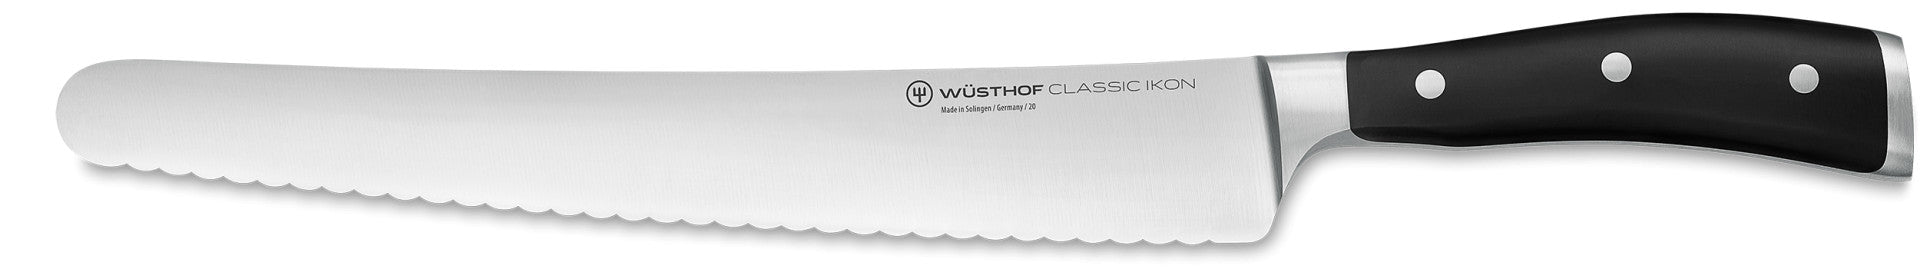 Wusthof Classic Ikon Super Slicer 26cm